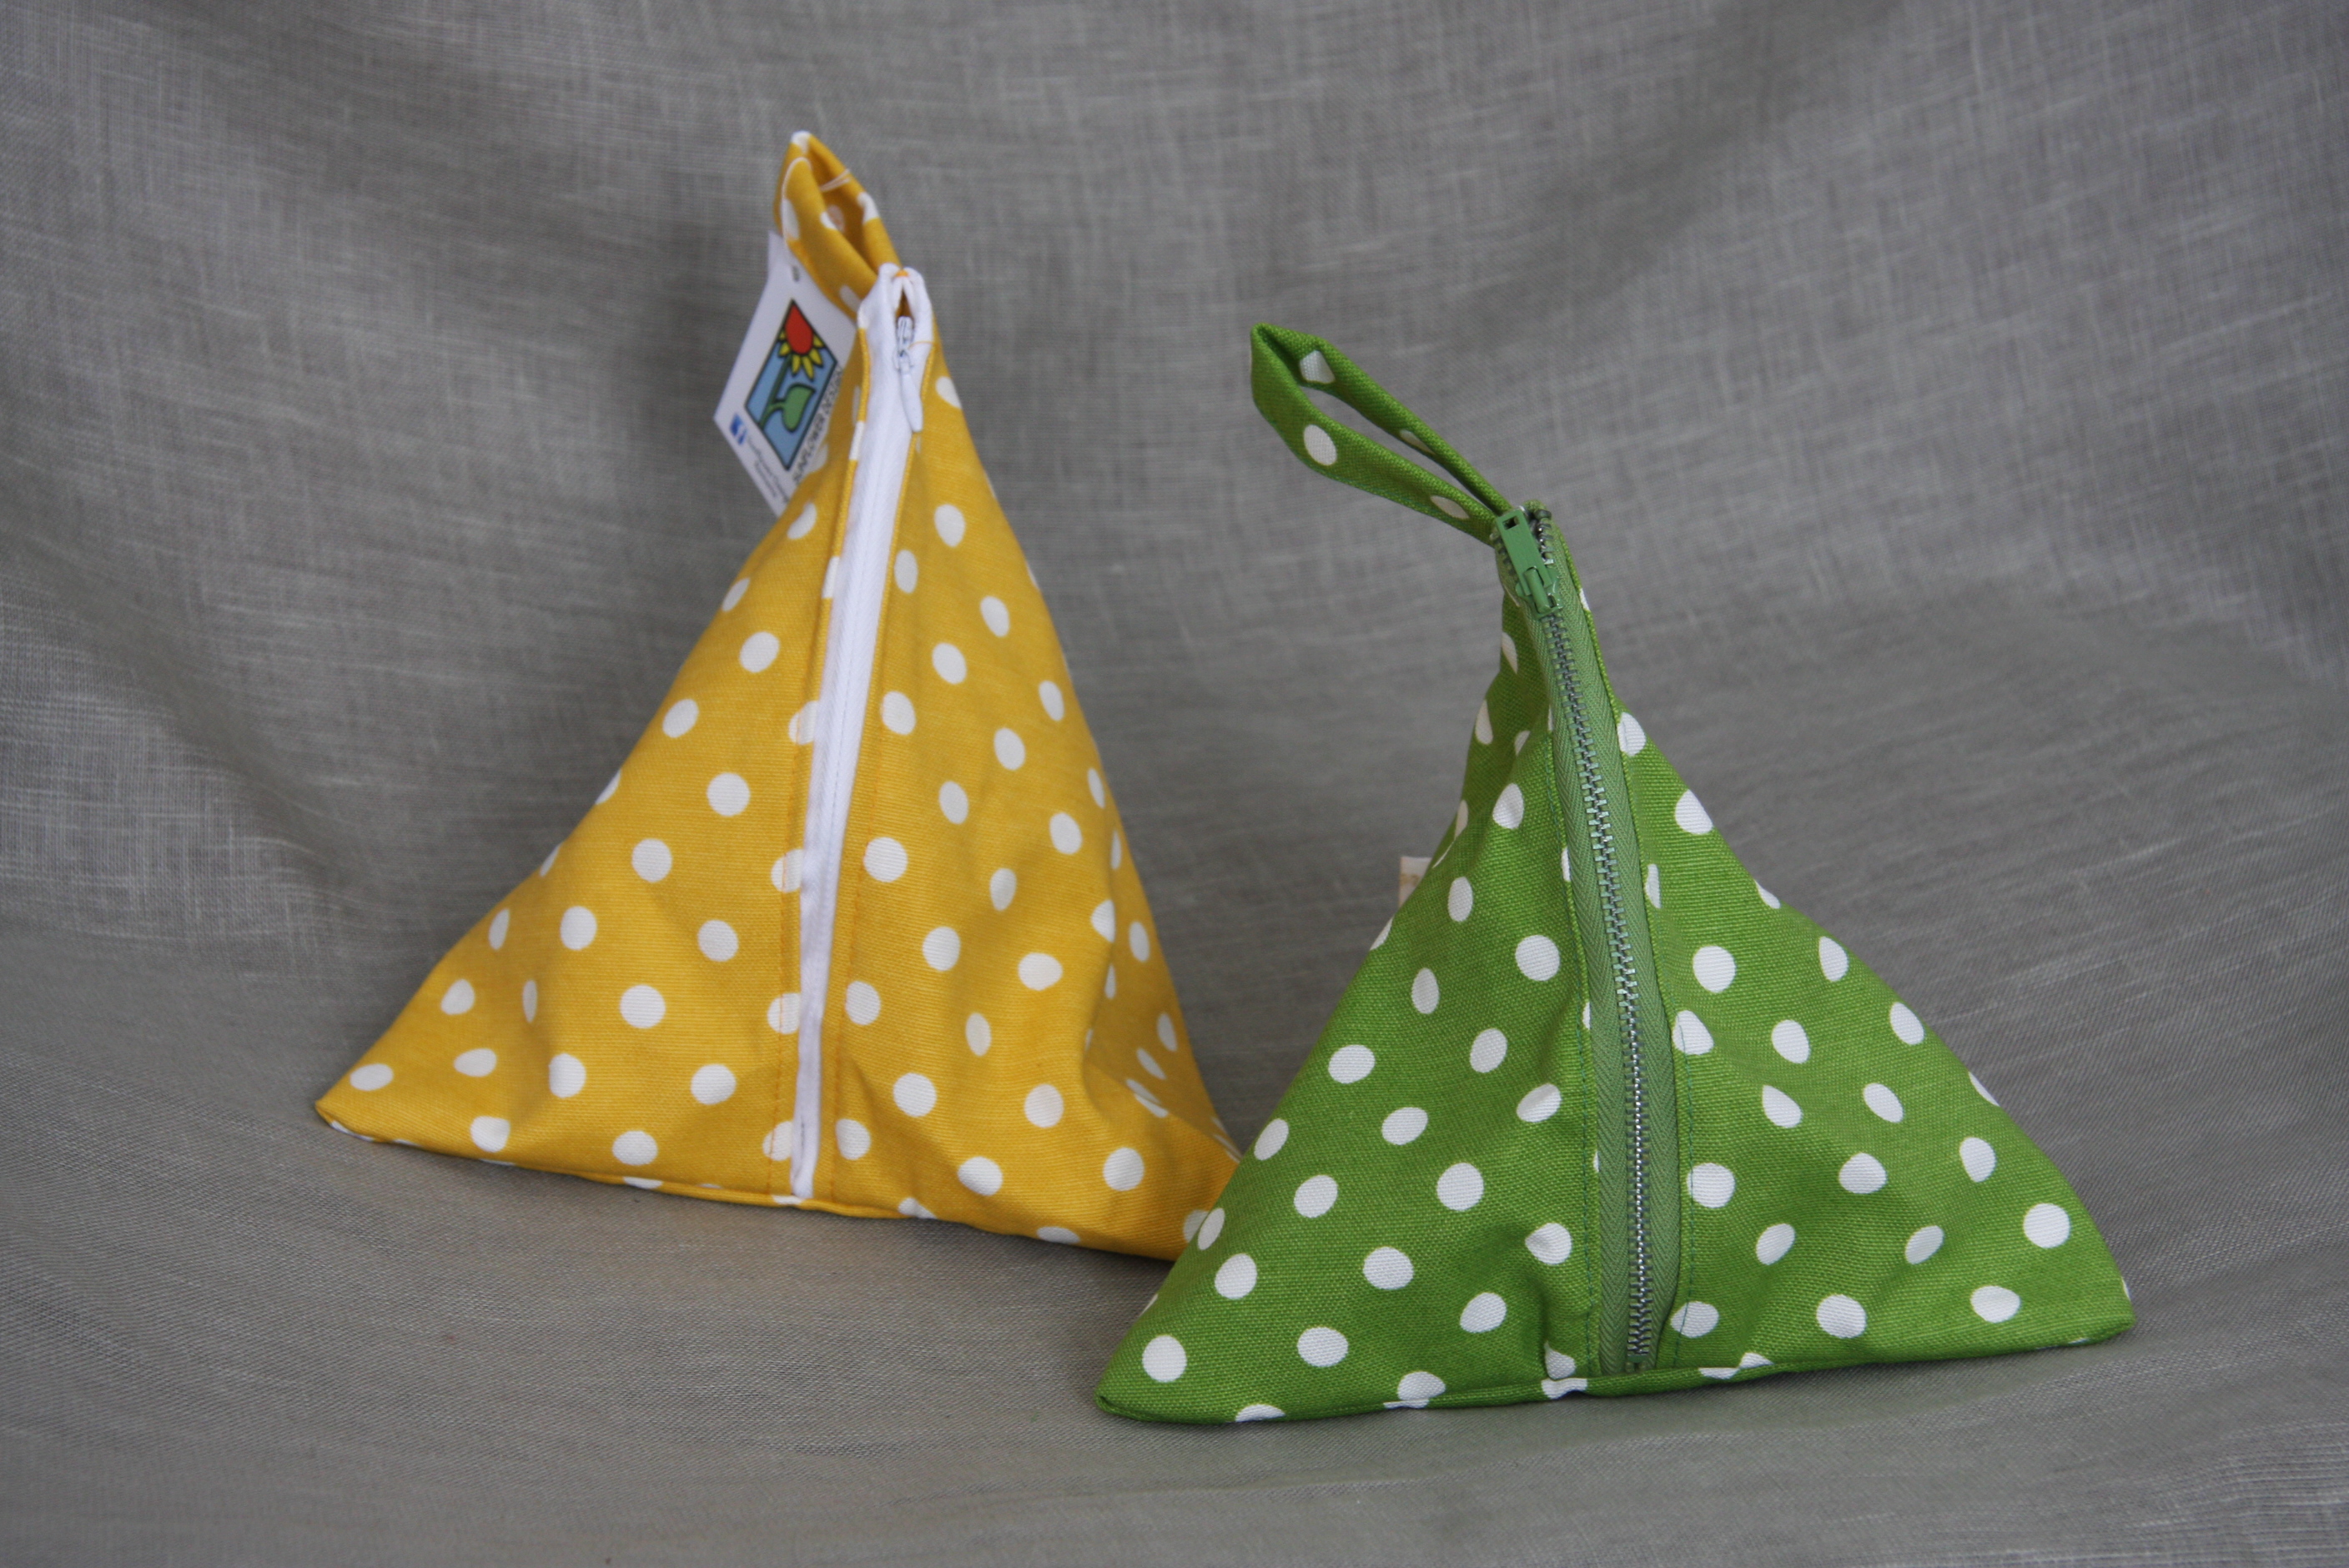 Tetra Pak bag – Sunflower Design